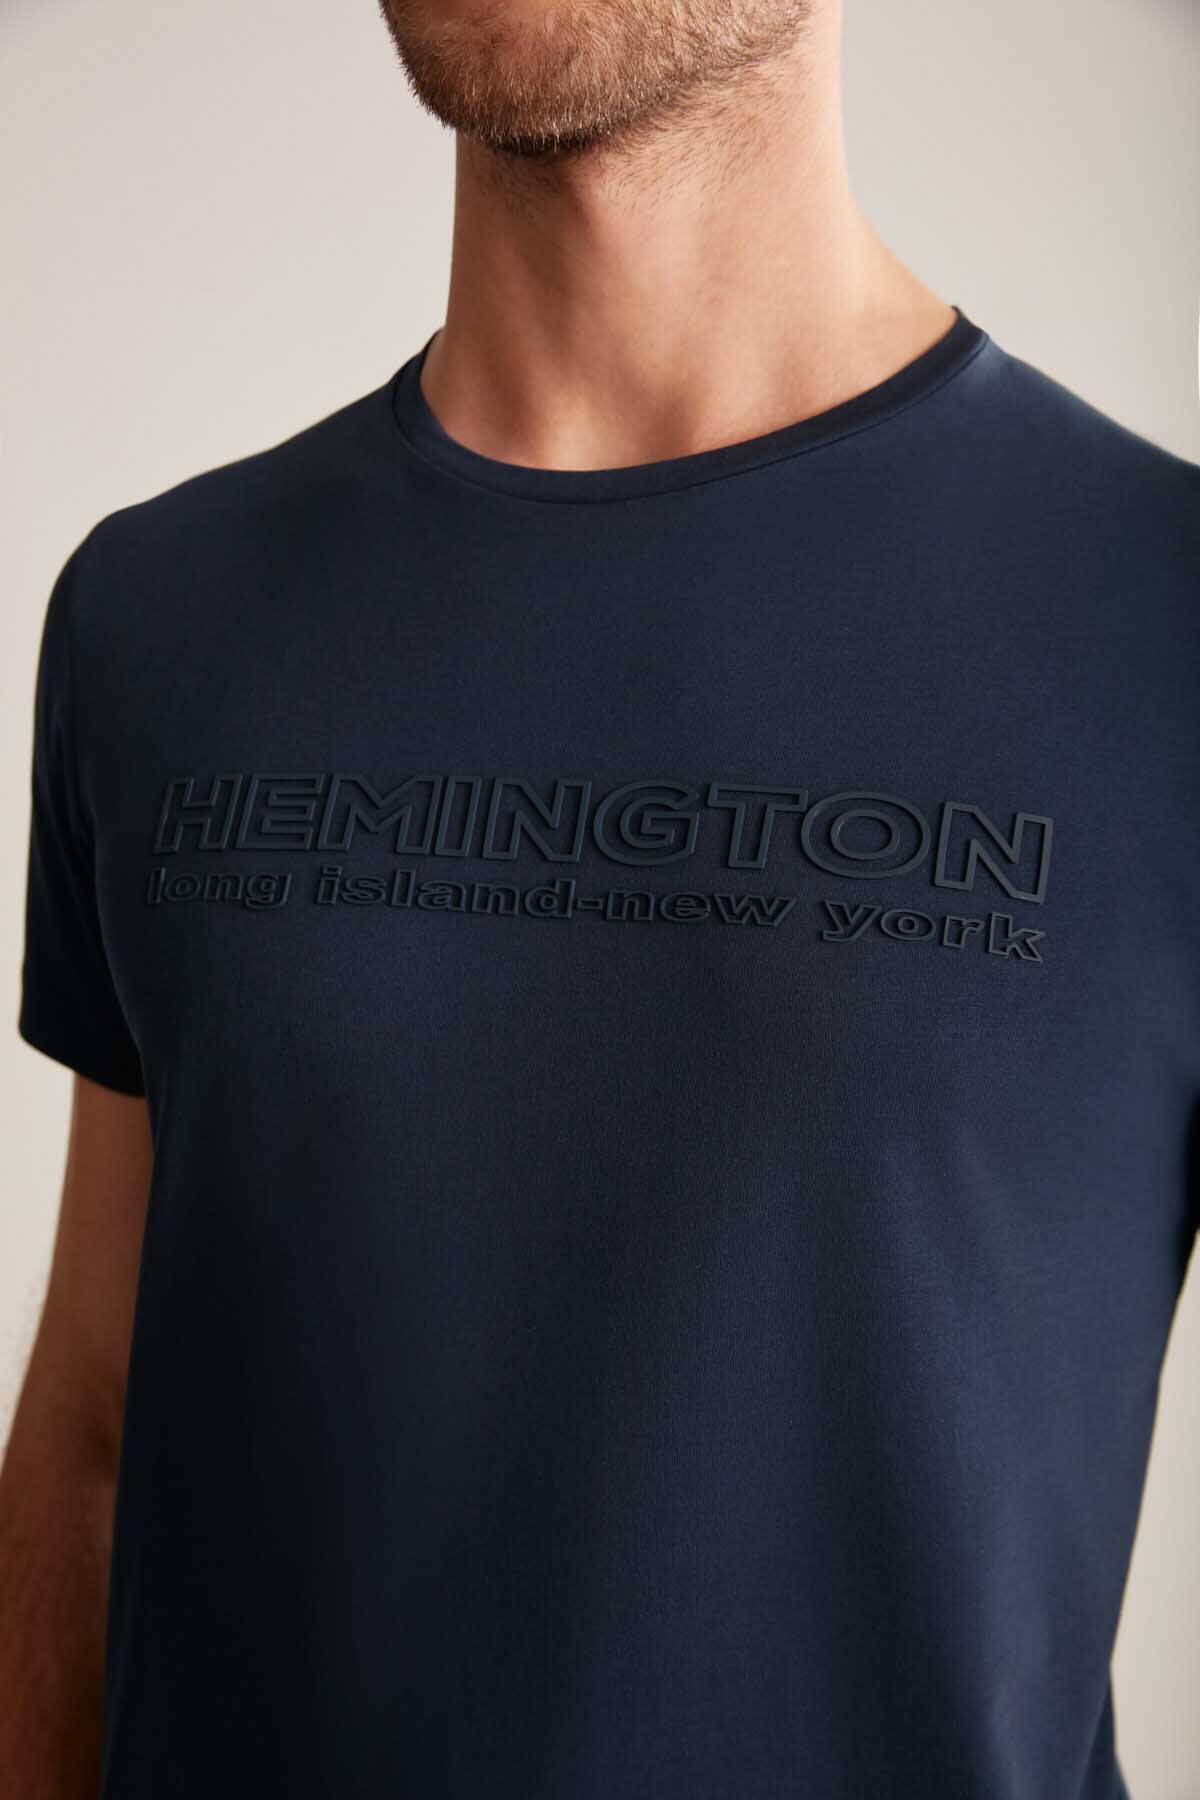 Hemington Kabartma Baskılı Lacivert Pima Pamuk T-Shirt